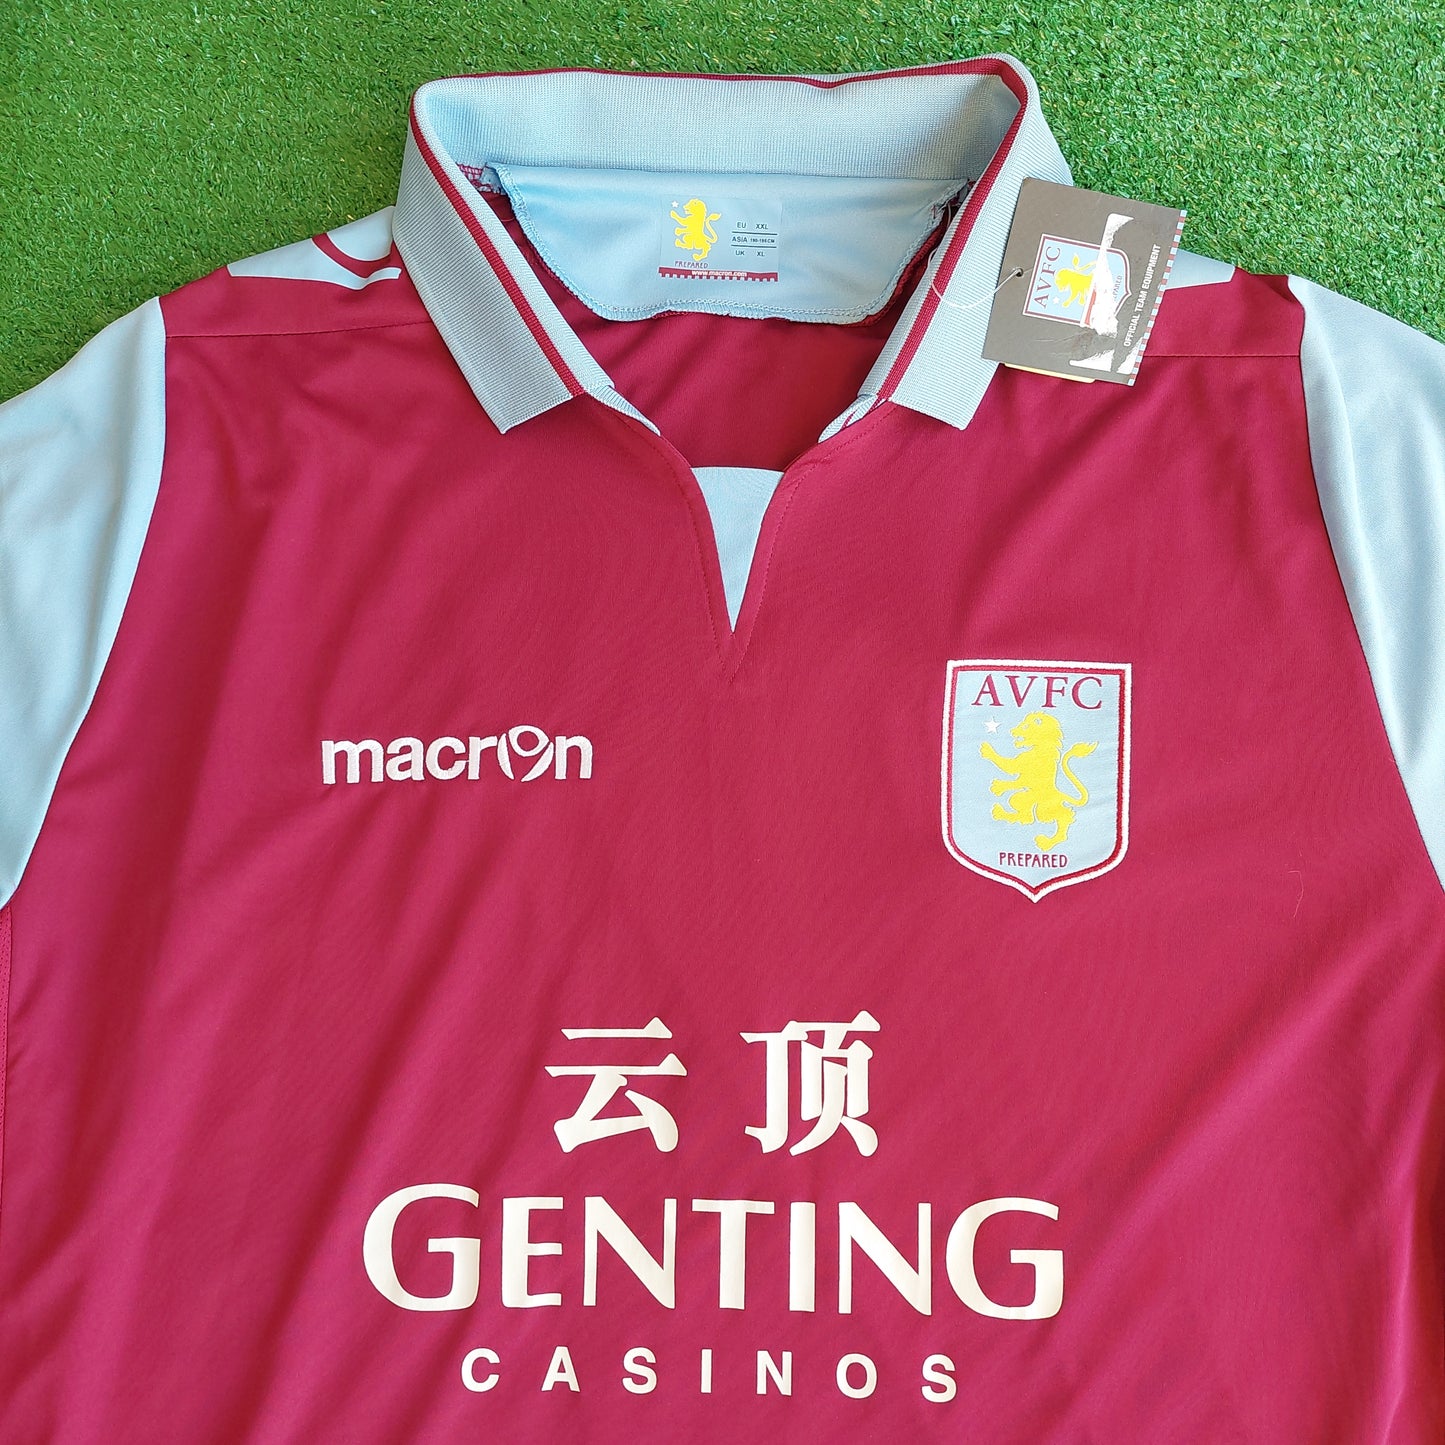 Aston Villa 2012/13 Home Shirt (BNWT) - Size XL